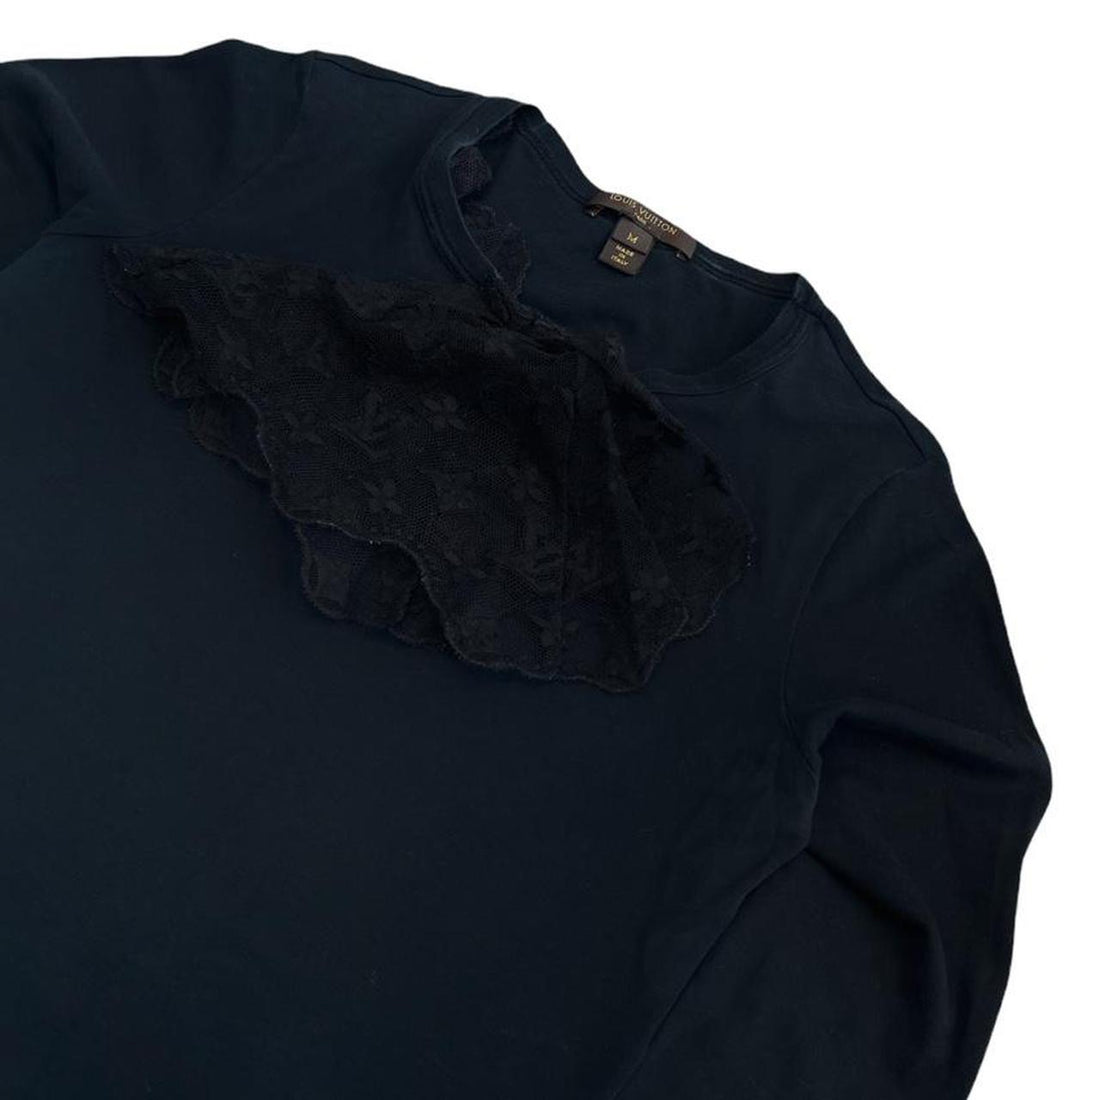 Louis Vuitton black Damier print ruffle top